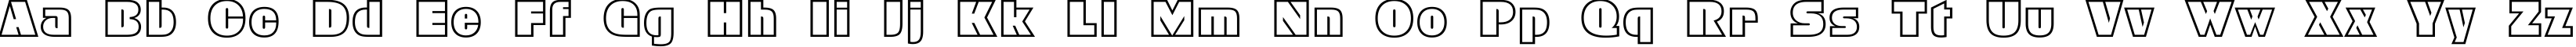 Пример написания английского алфавита шрифтом GeoC